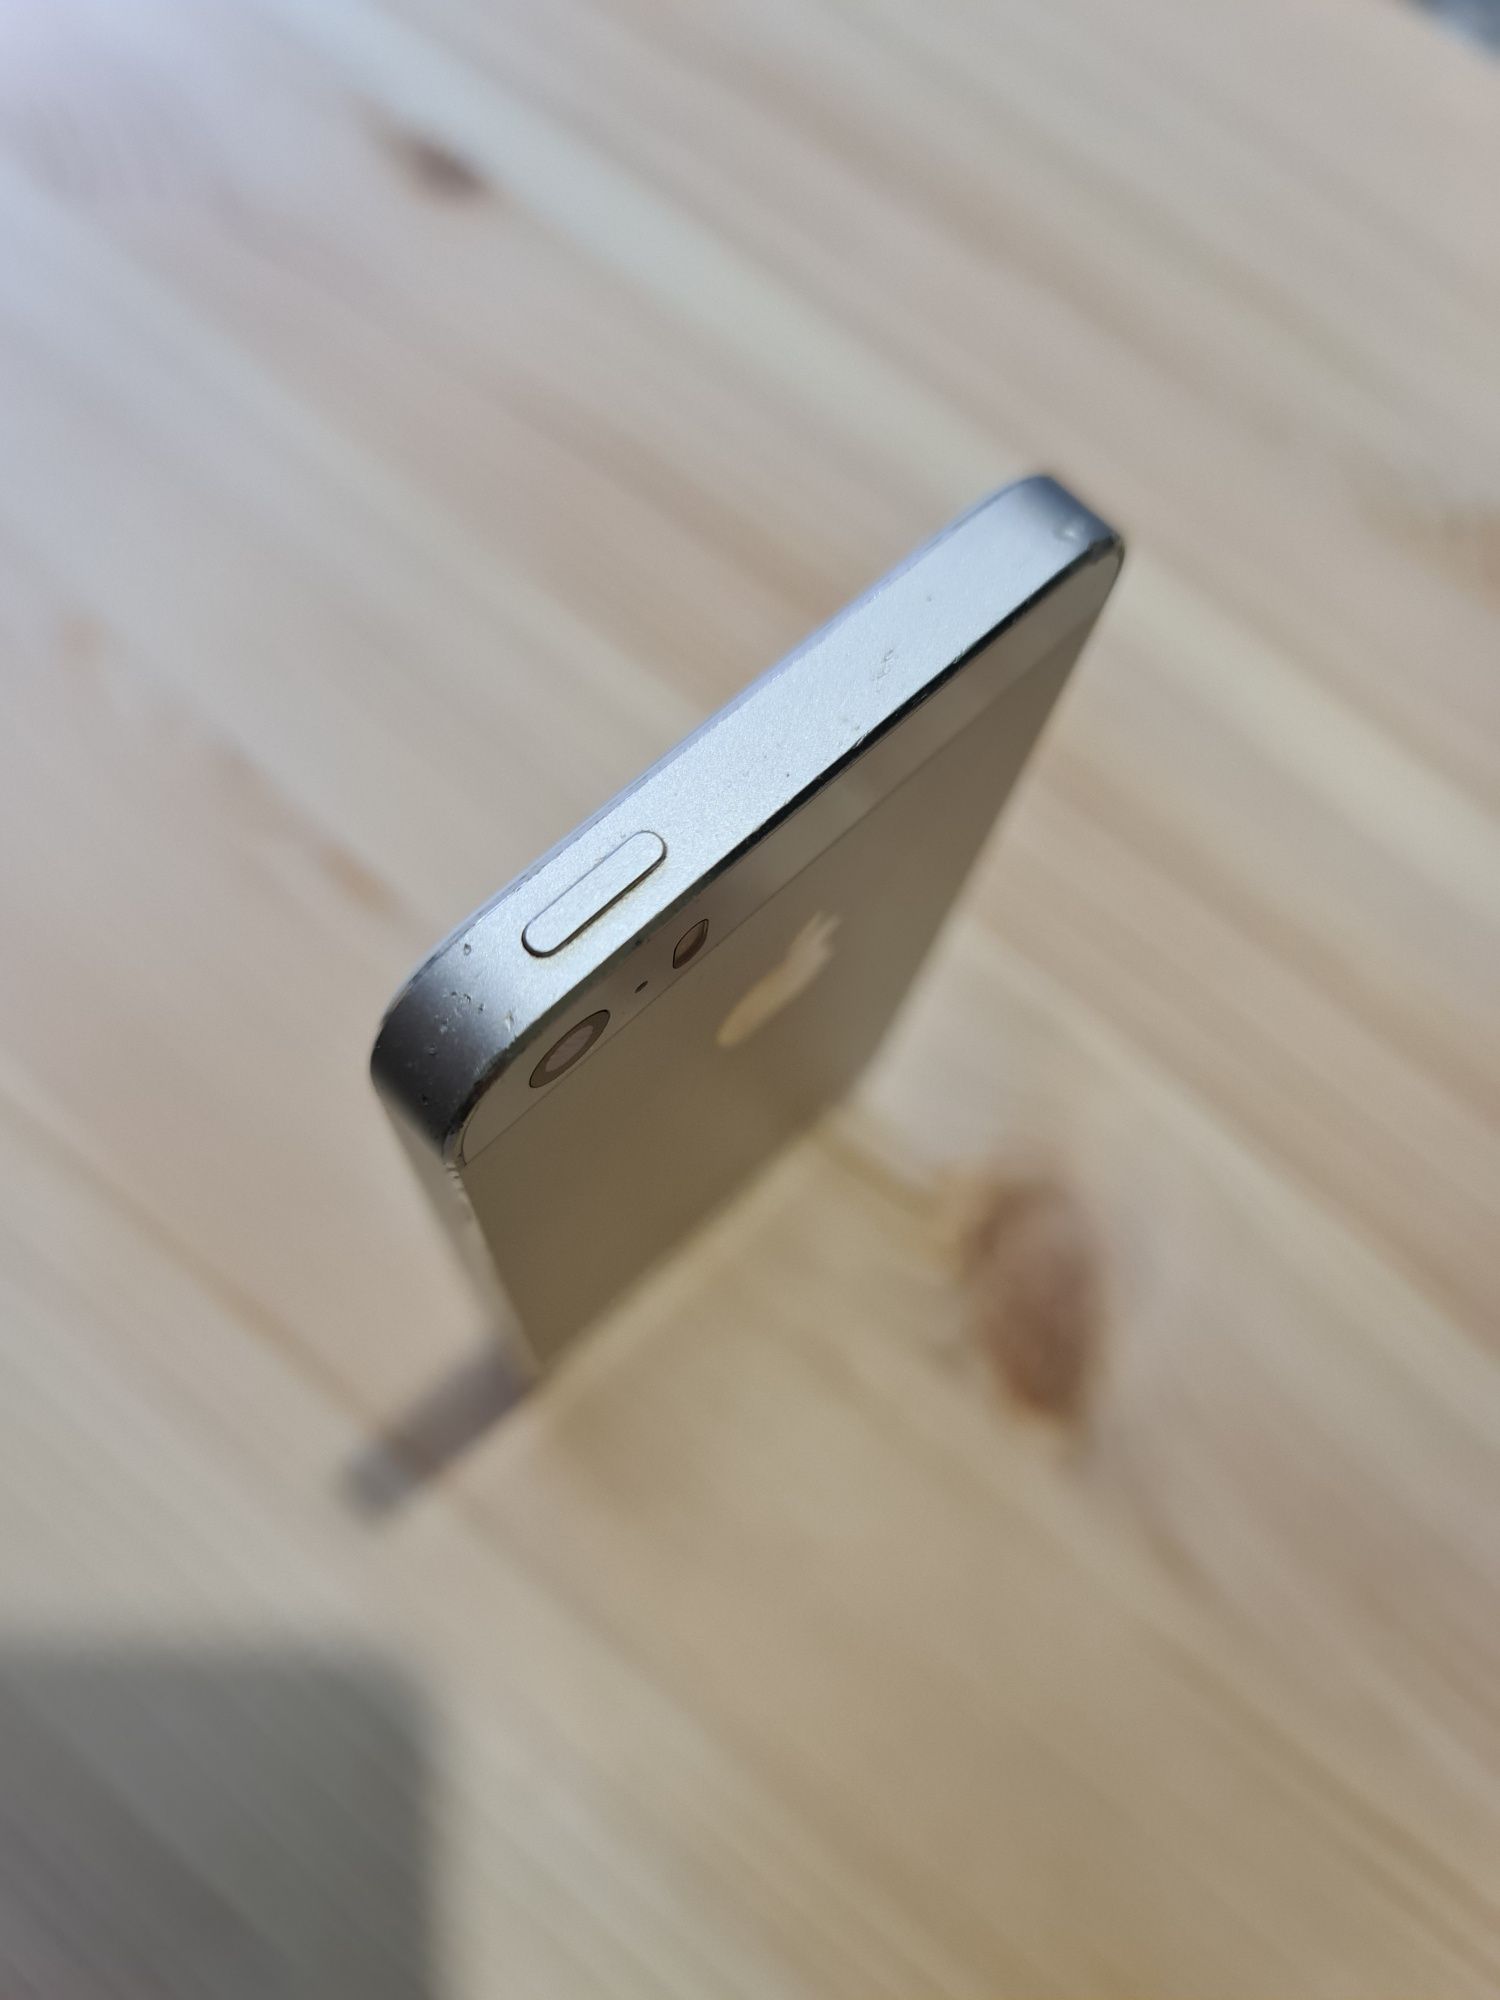 Iphone 5S Silver 16gb Neverlock